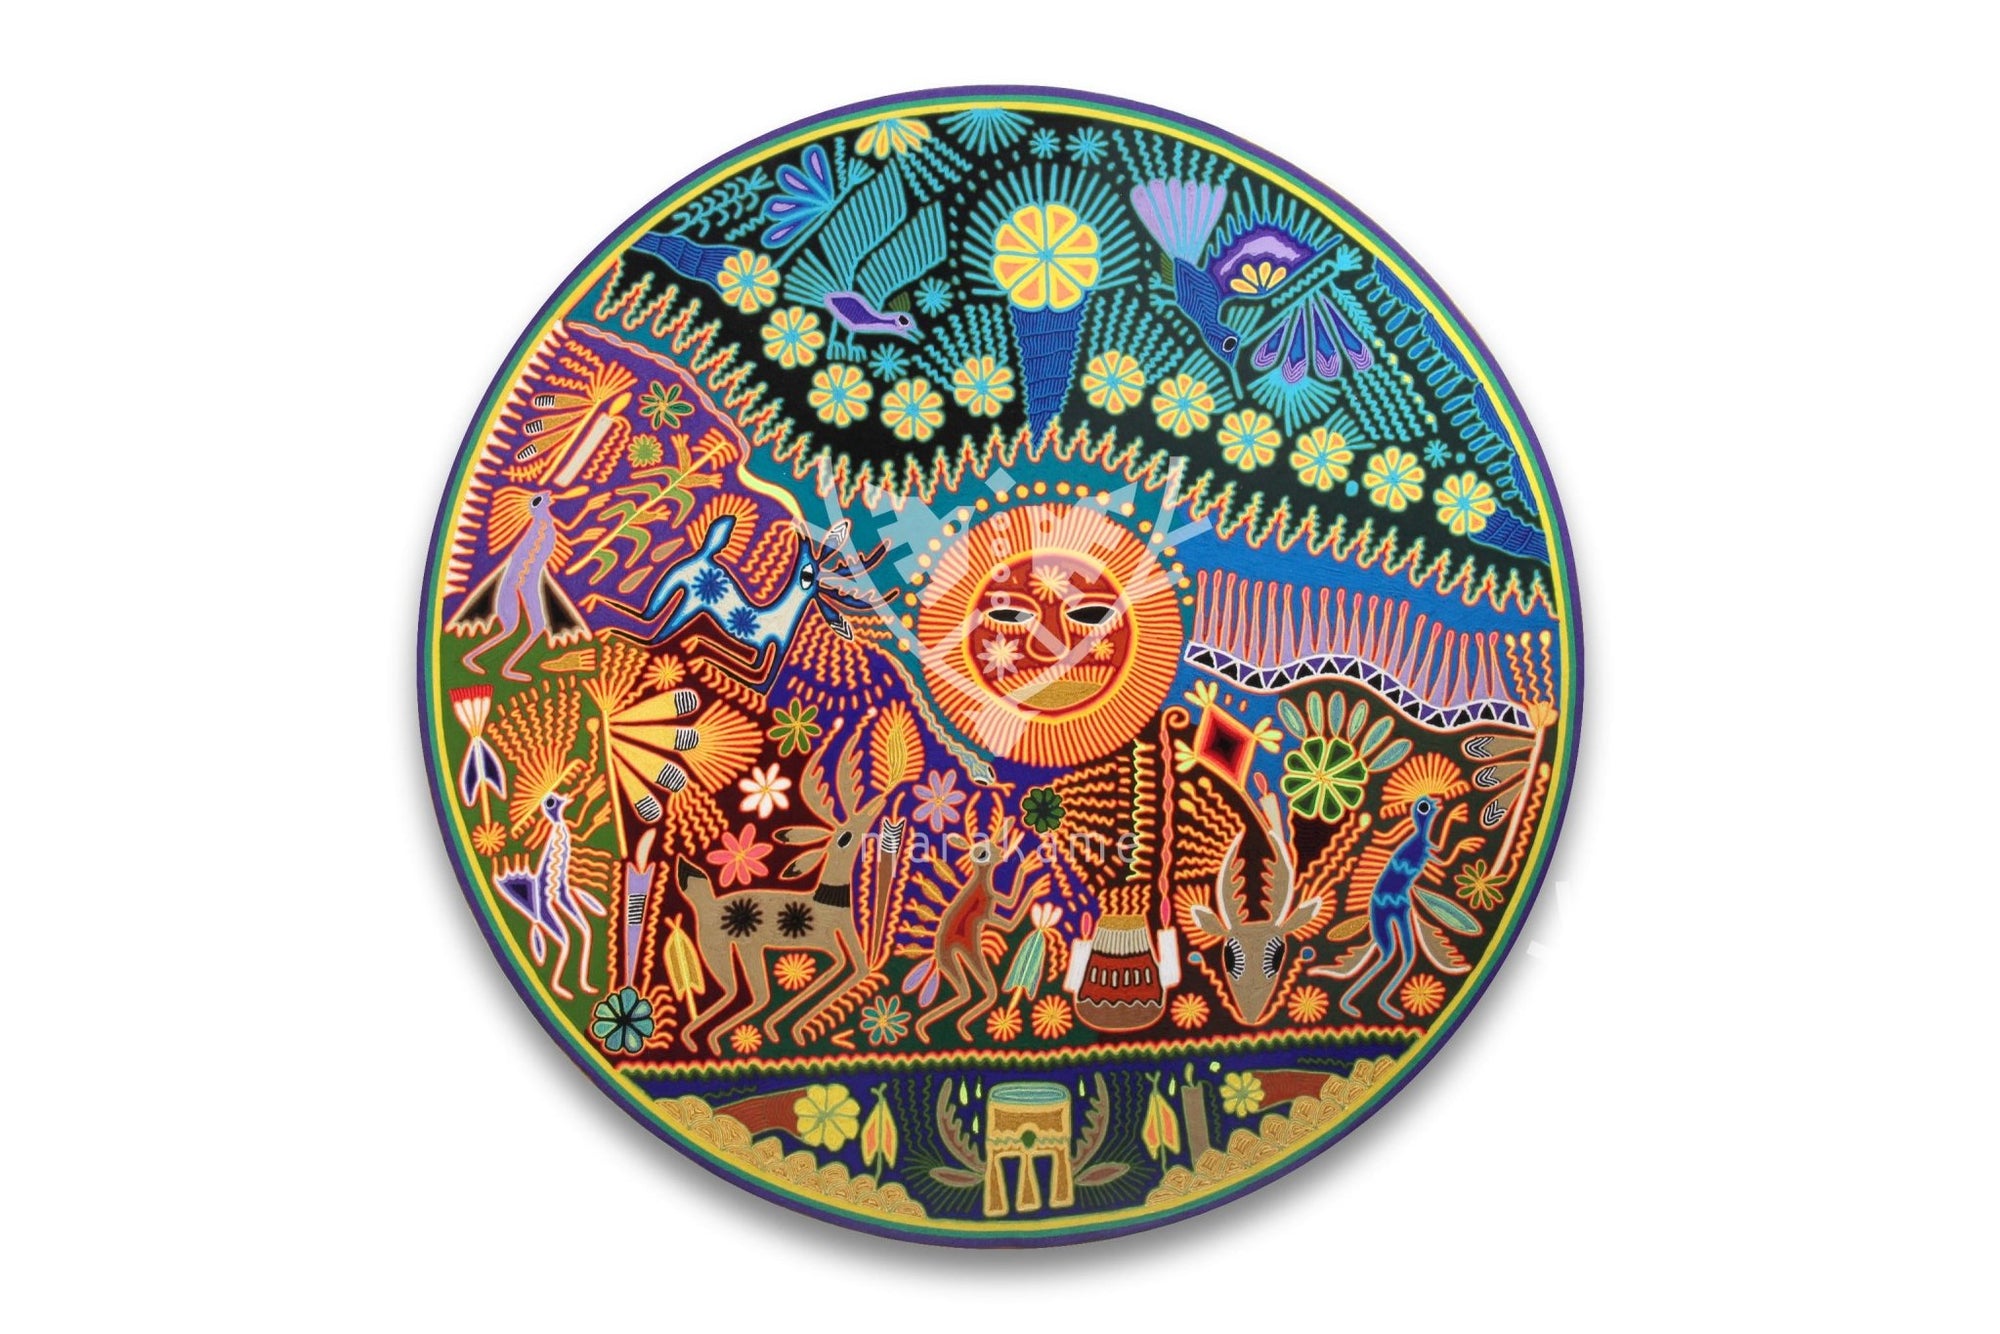 Nierika de estamen Huichol の絵画 - 父太陽の誕生 - 120 x 120 cm。 - ウイチョル族の芸術 - マラカメ